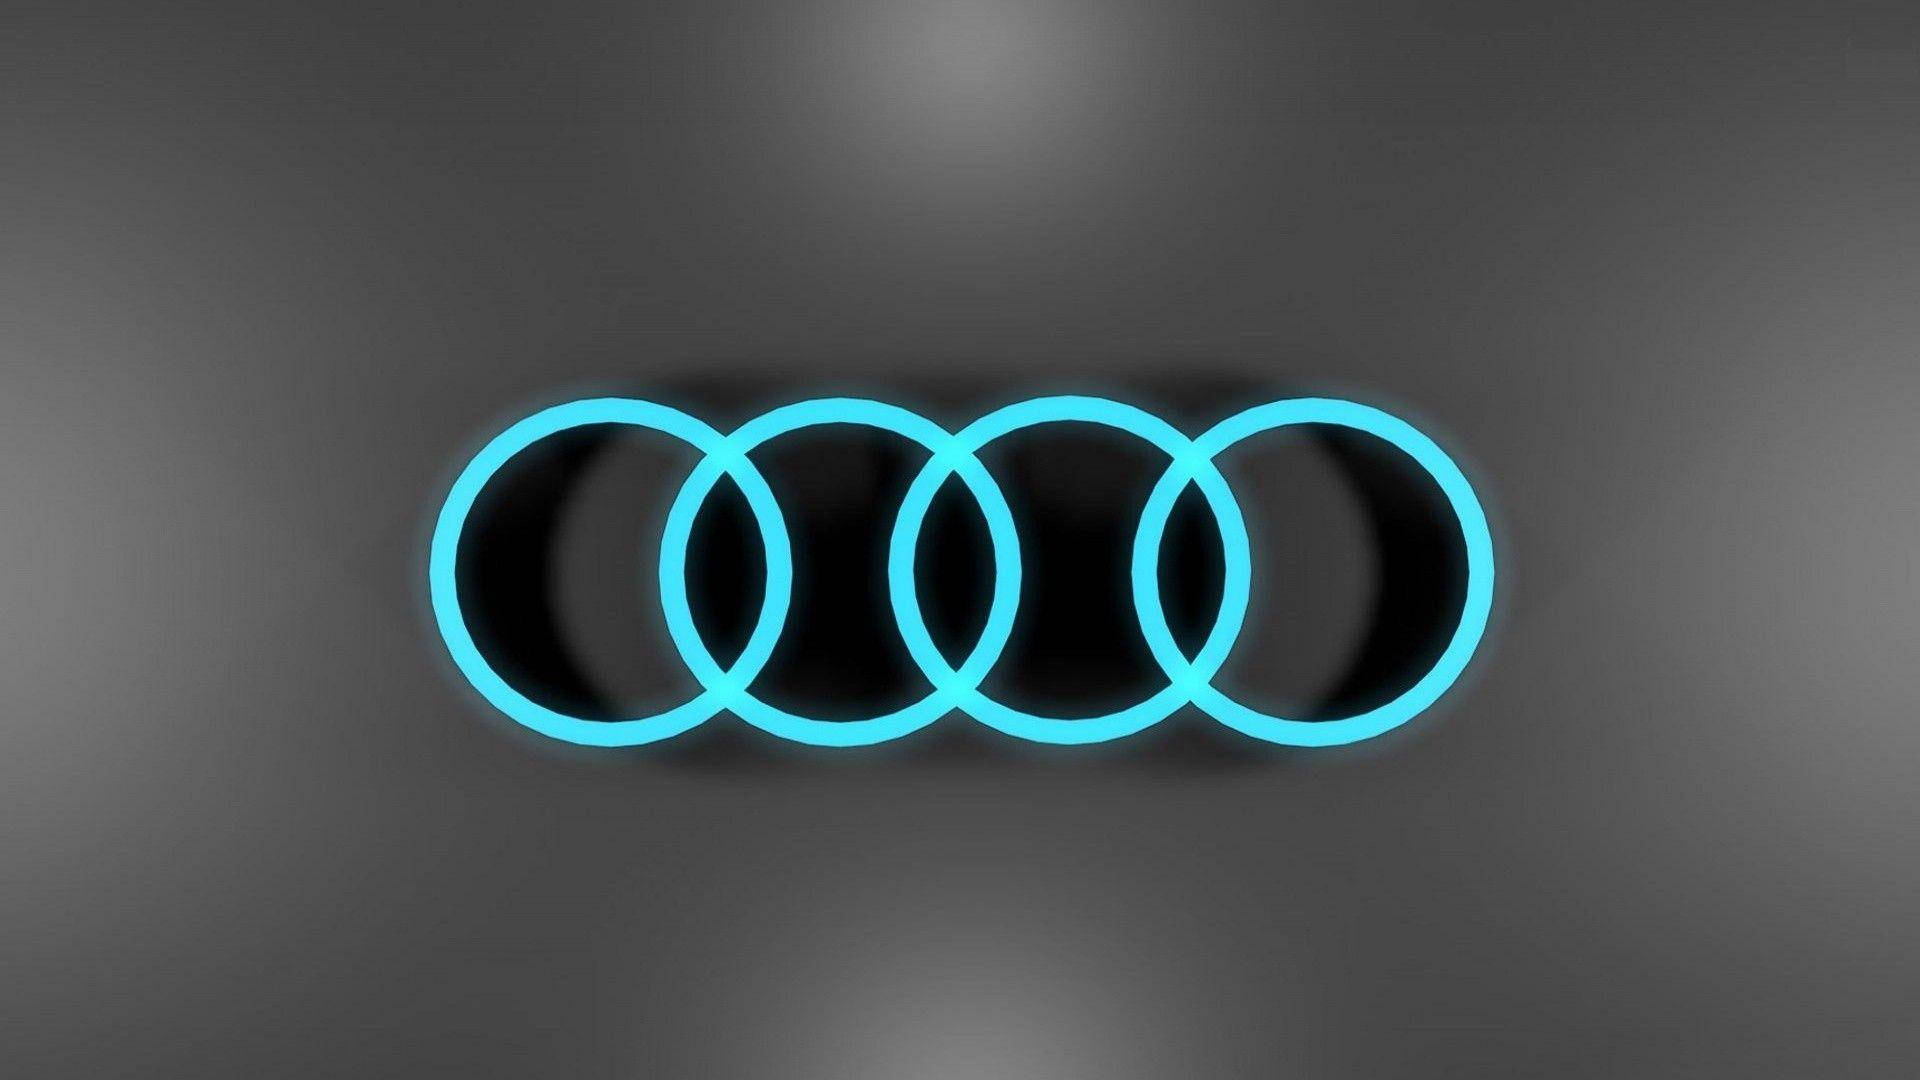 Audi Cool Logos Wallpaper